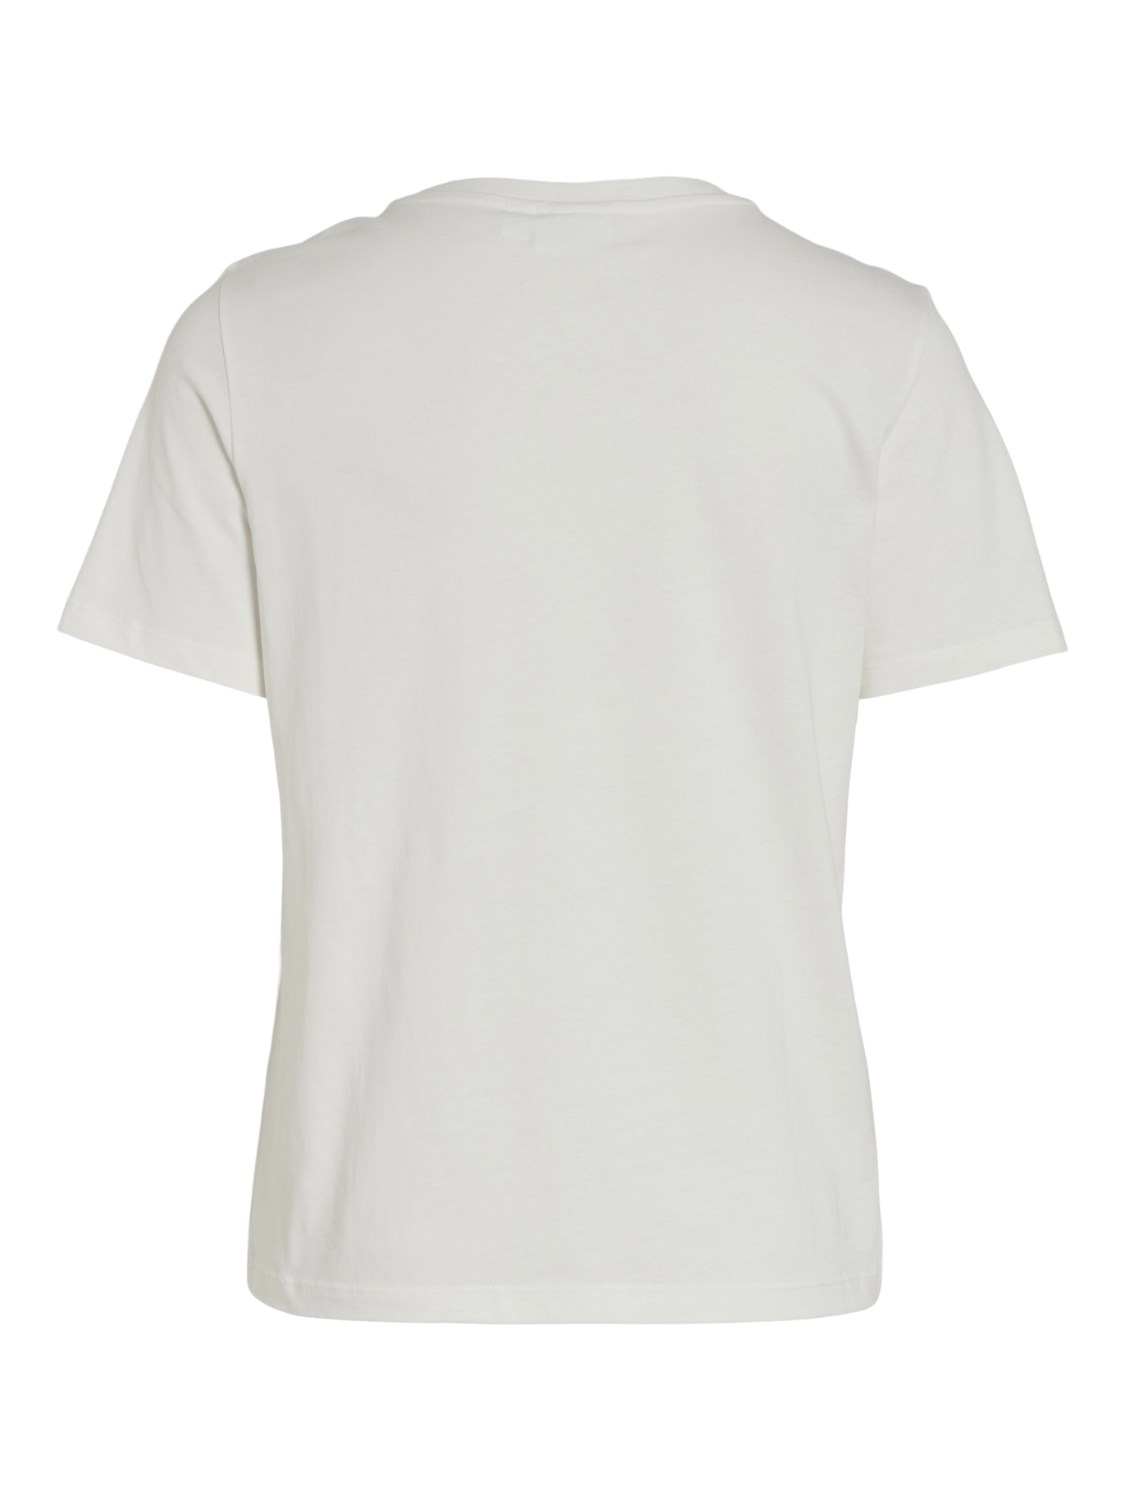 Camiseta manga corta básica modelo sybilla en color blanco con mensaje Muse. Modelo 14092082 de Vila.